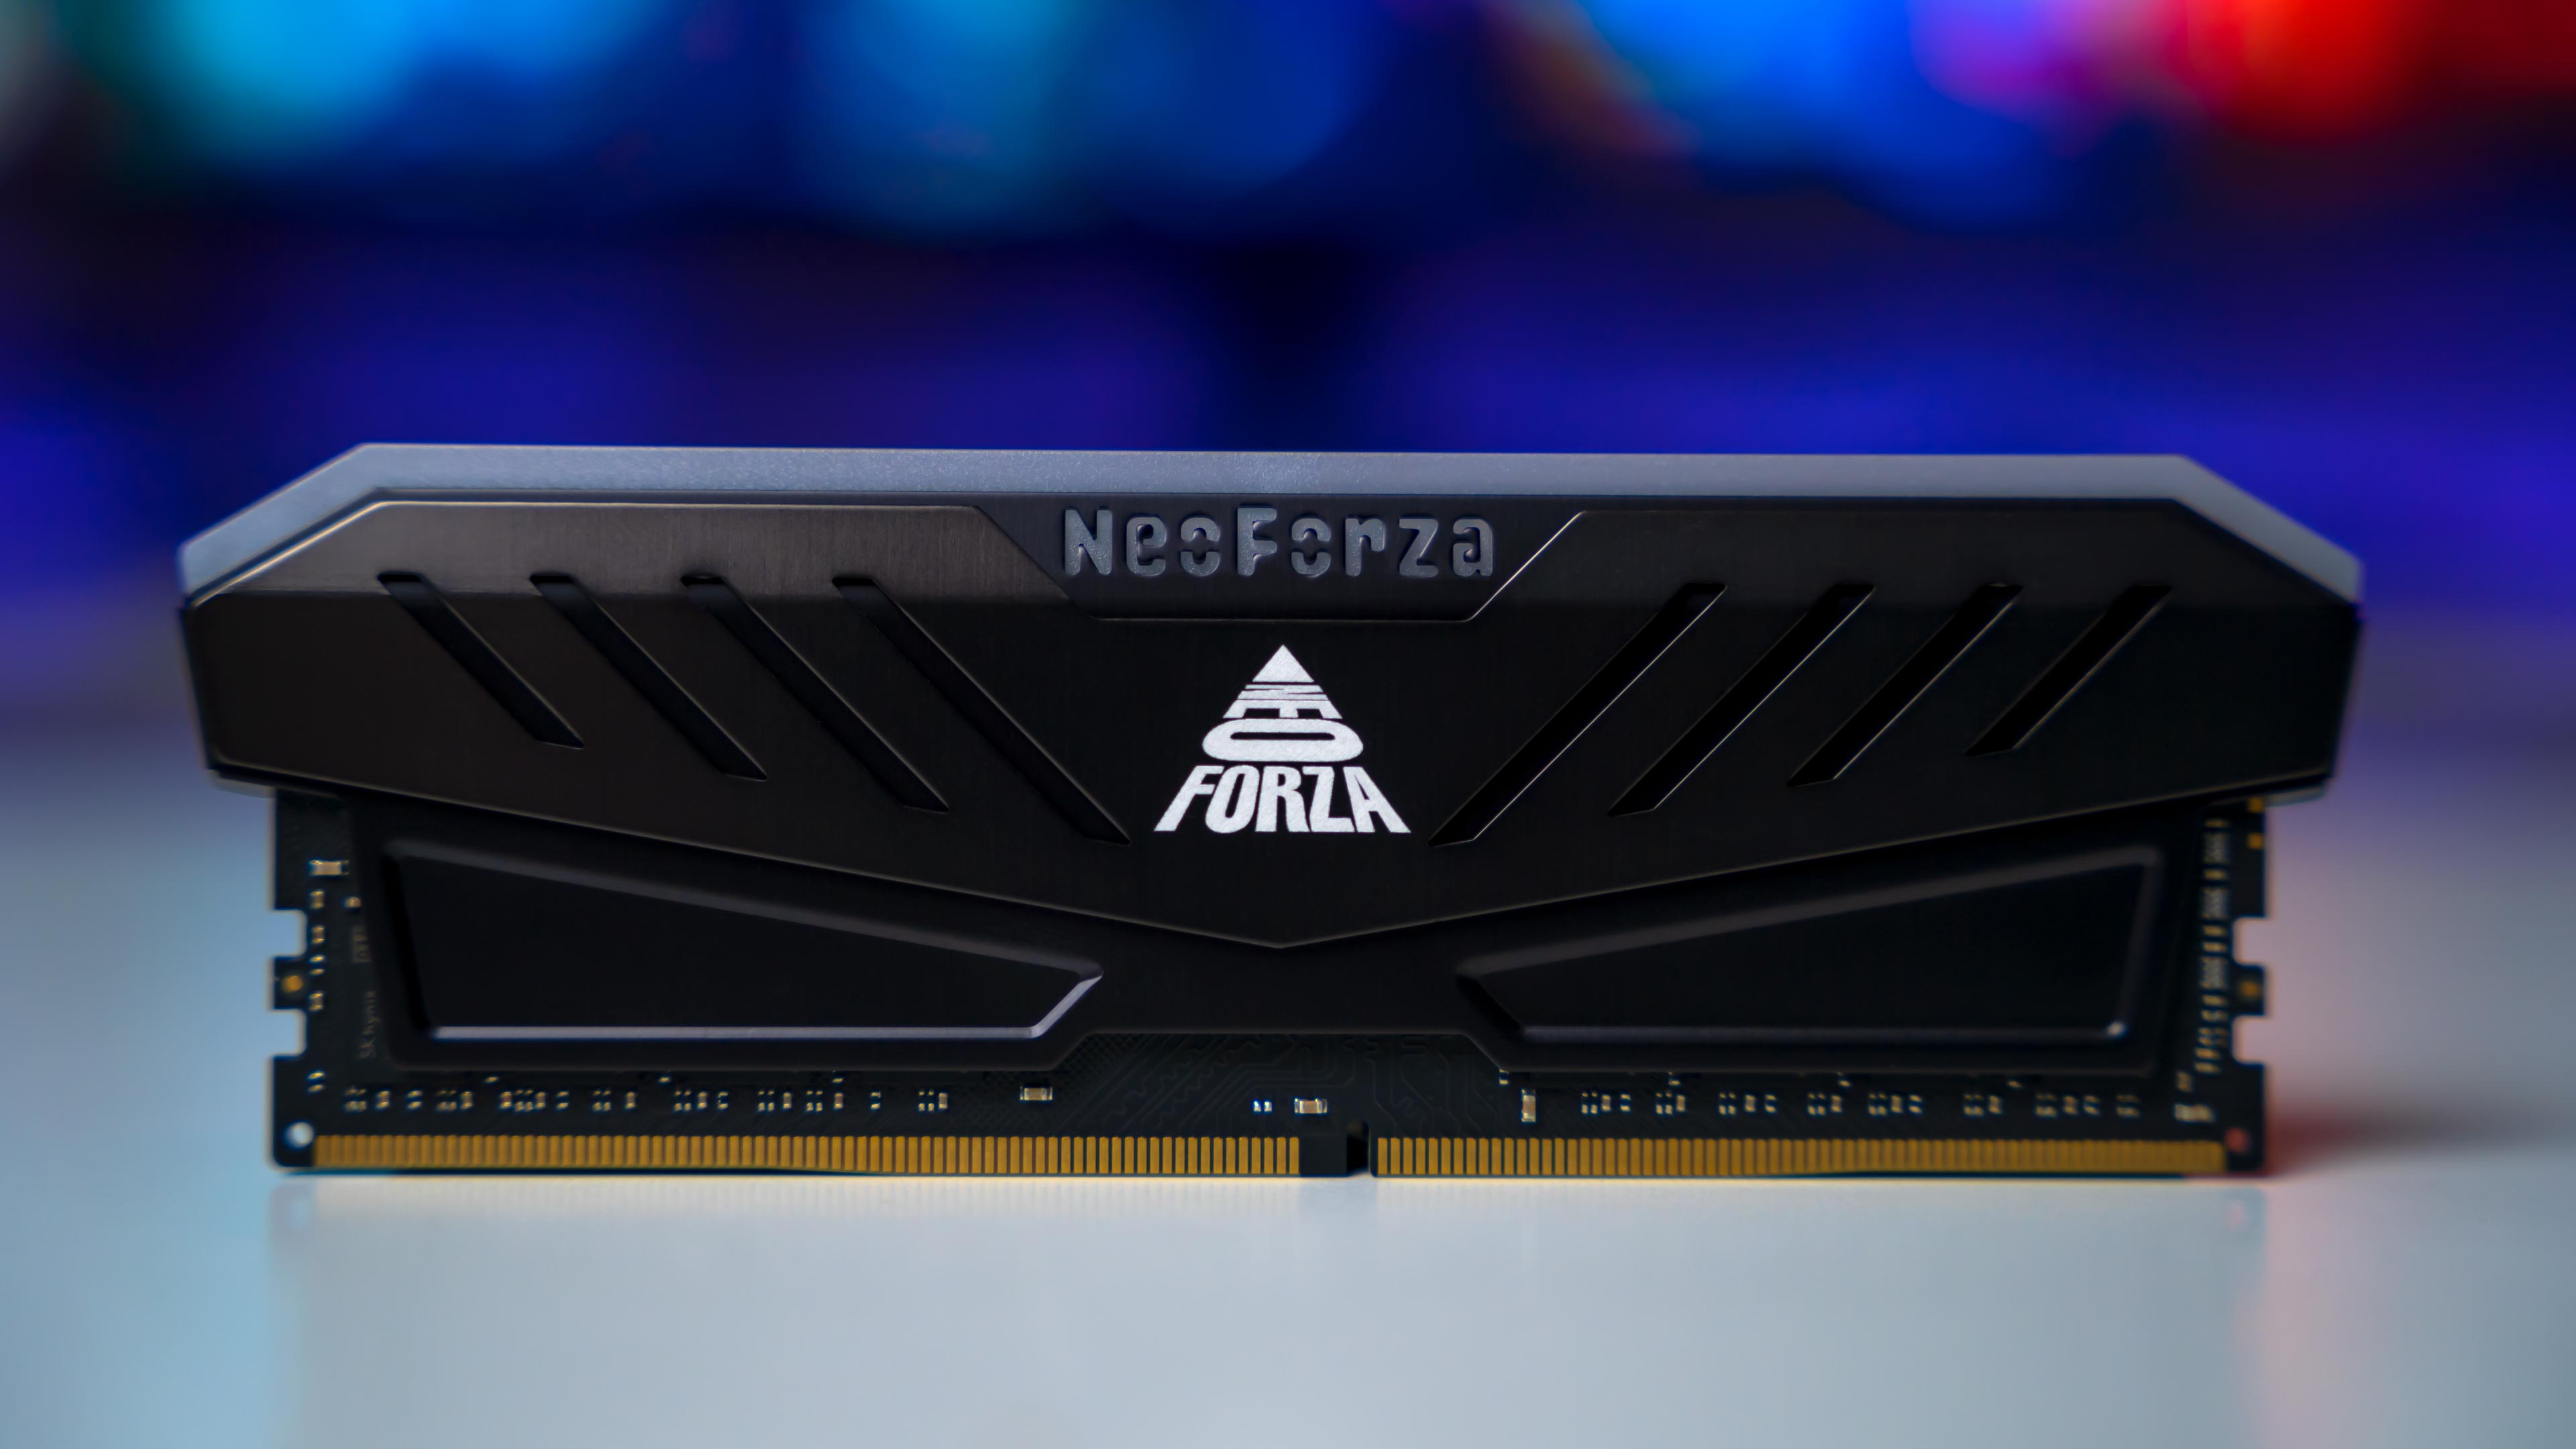 Neo Forza Mars 32GB DDR4 4000MHz Memory (1)